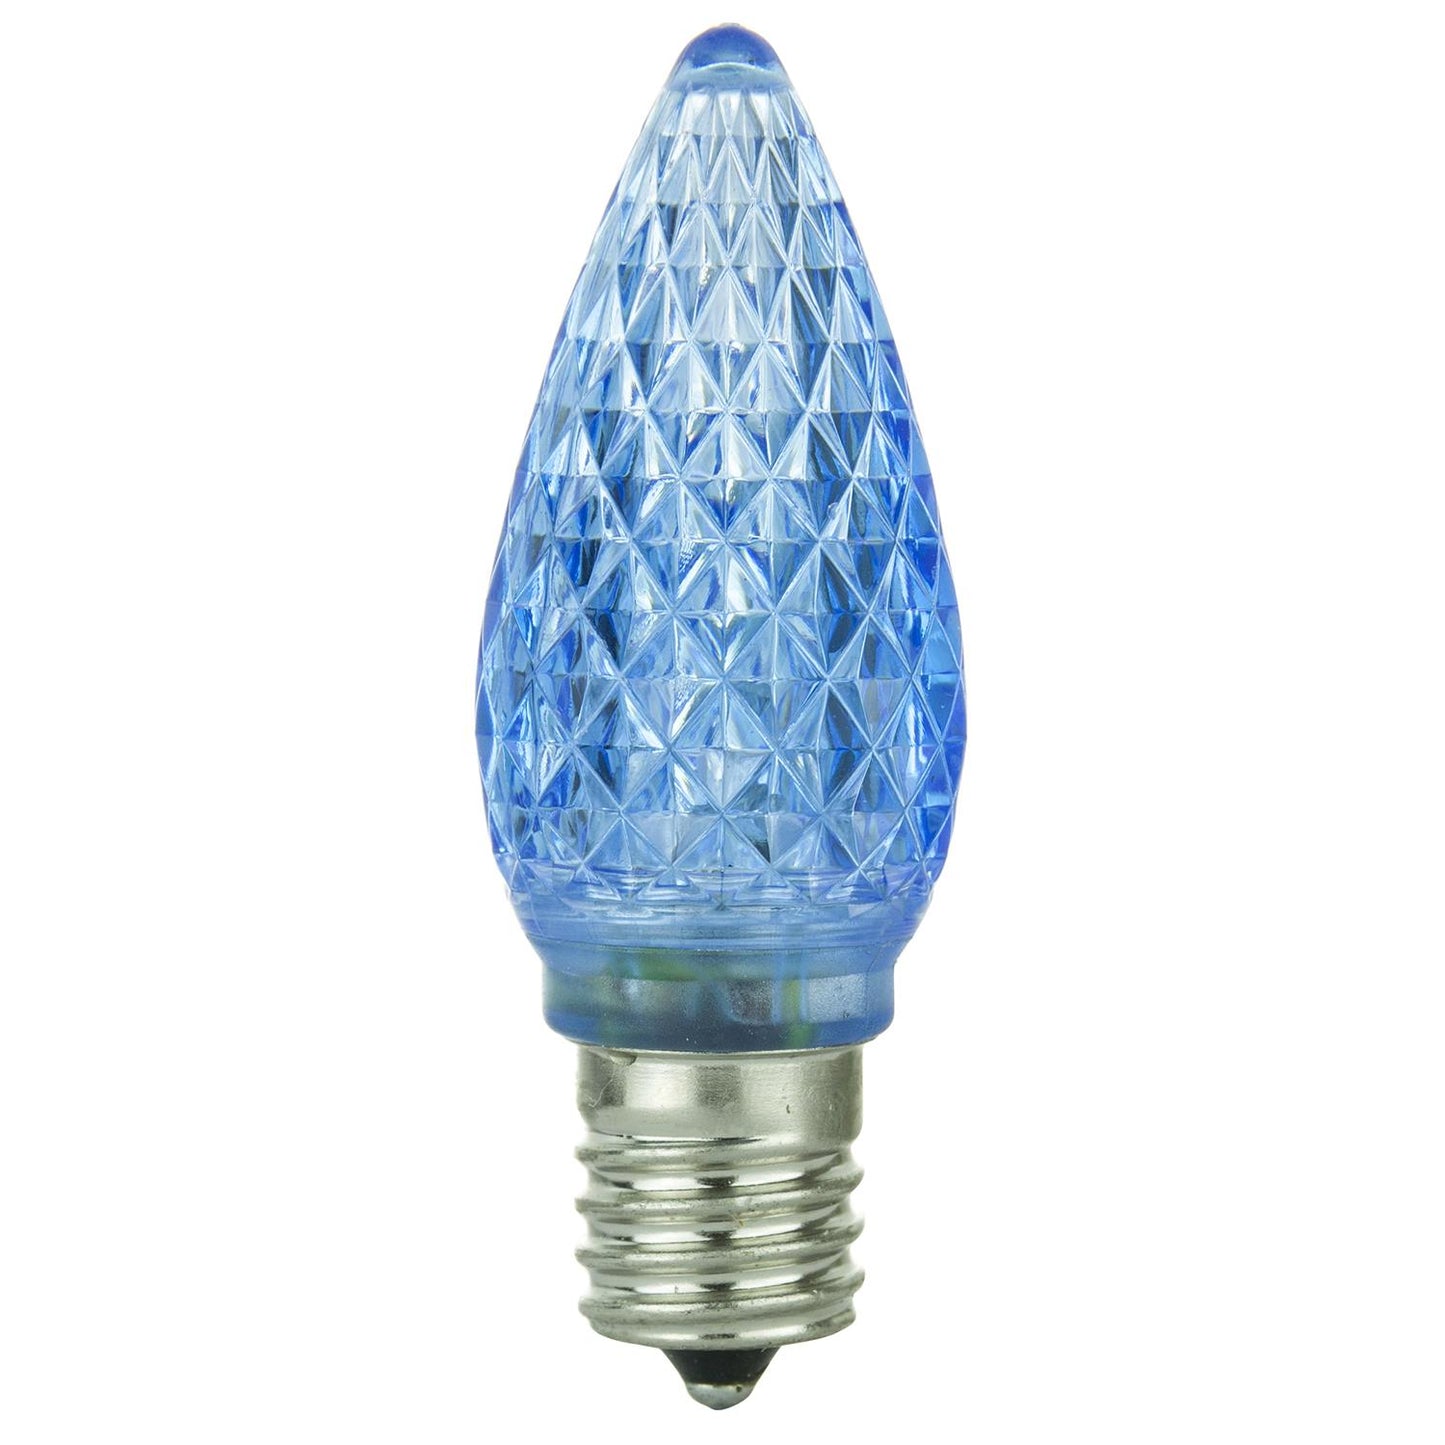 Sunlite LED C9 0.4W Blue Colored Decorative Chandelier Light Bulbs, Intermediate (E17) Base